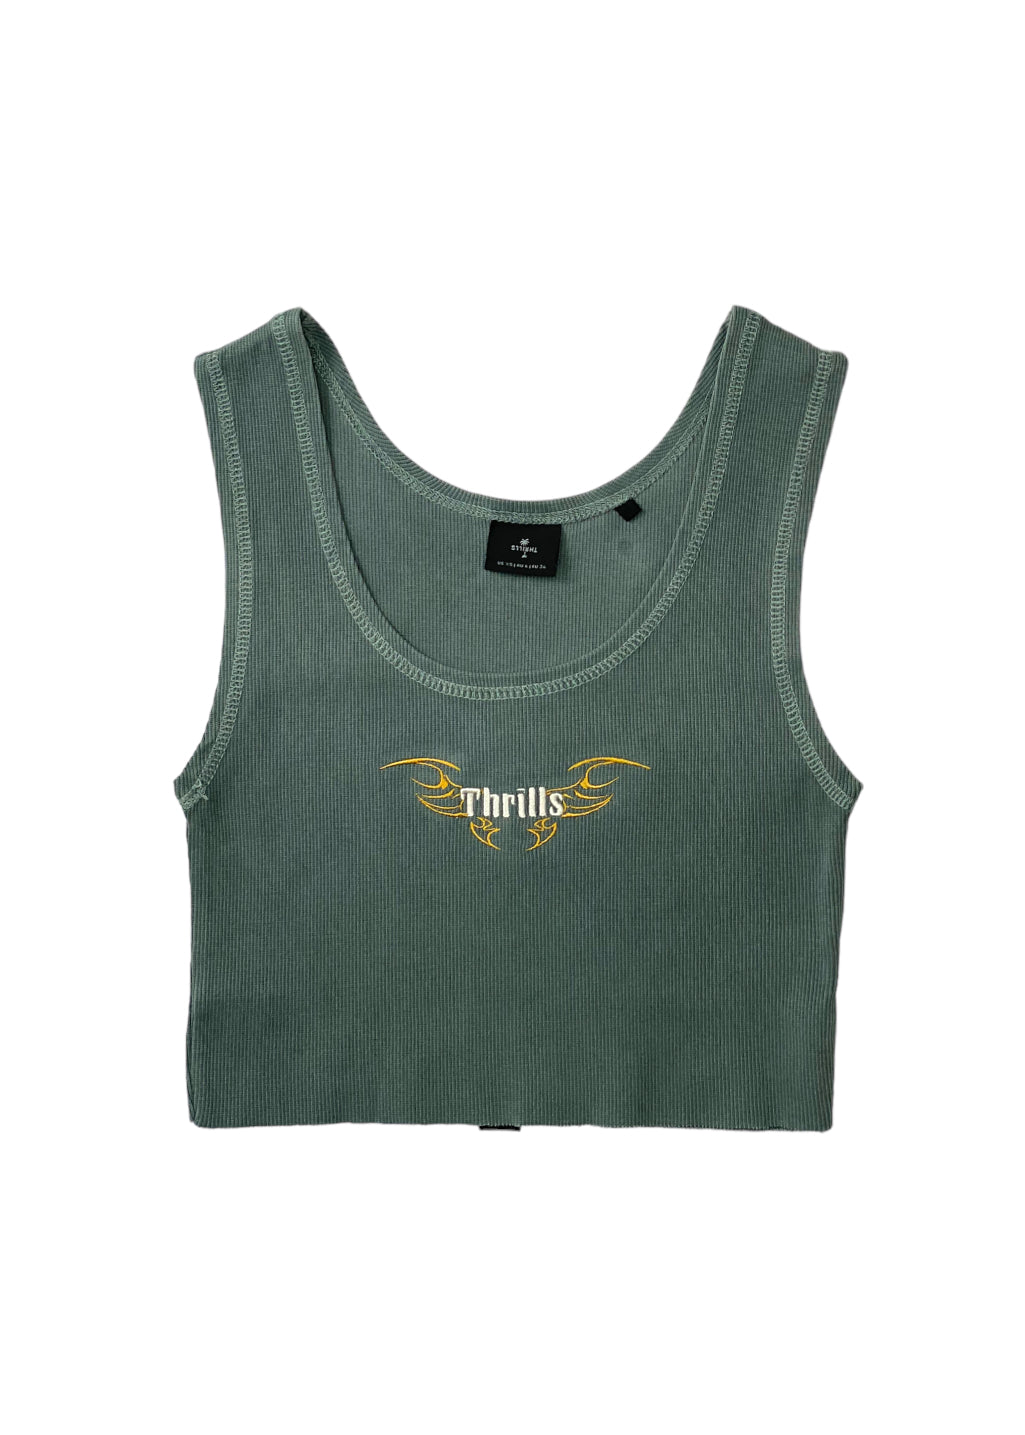 Brands We Love / Women's Tanks & Shirts